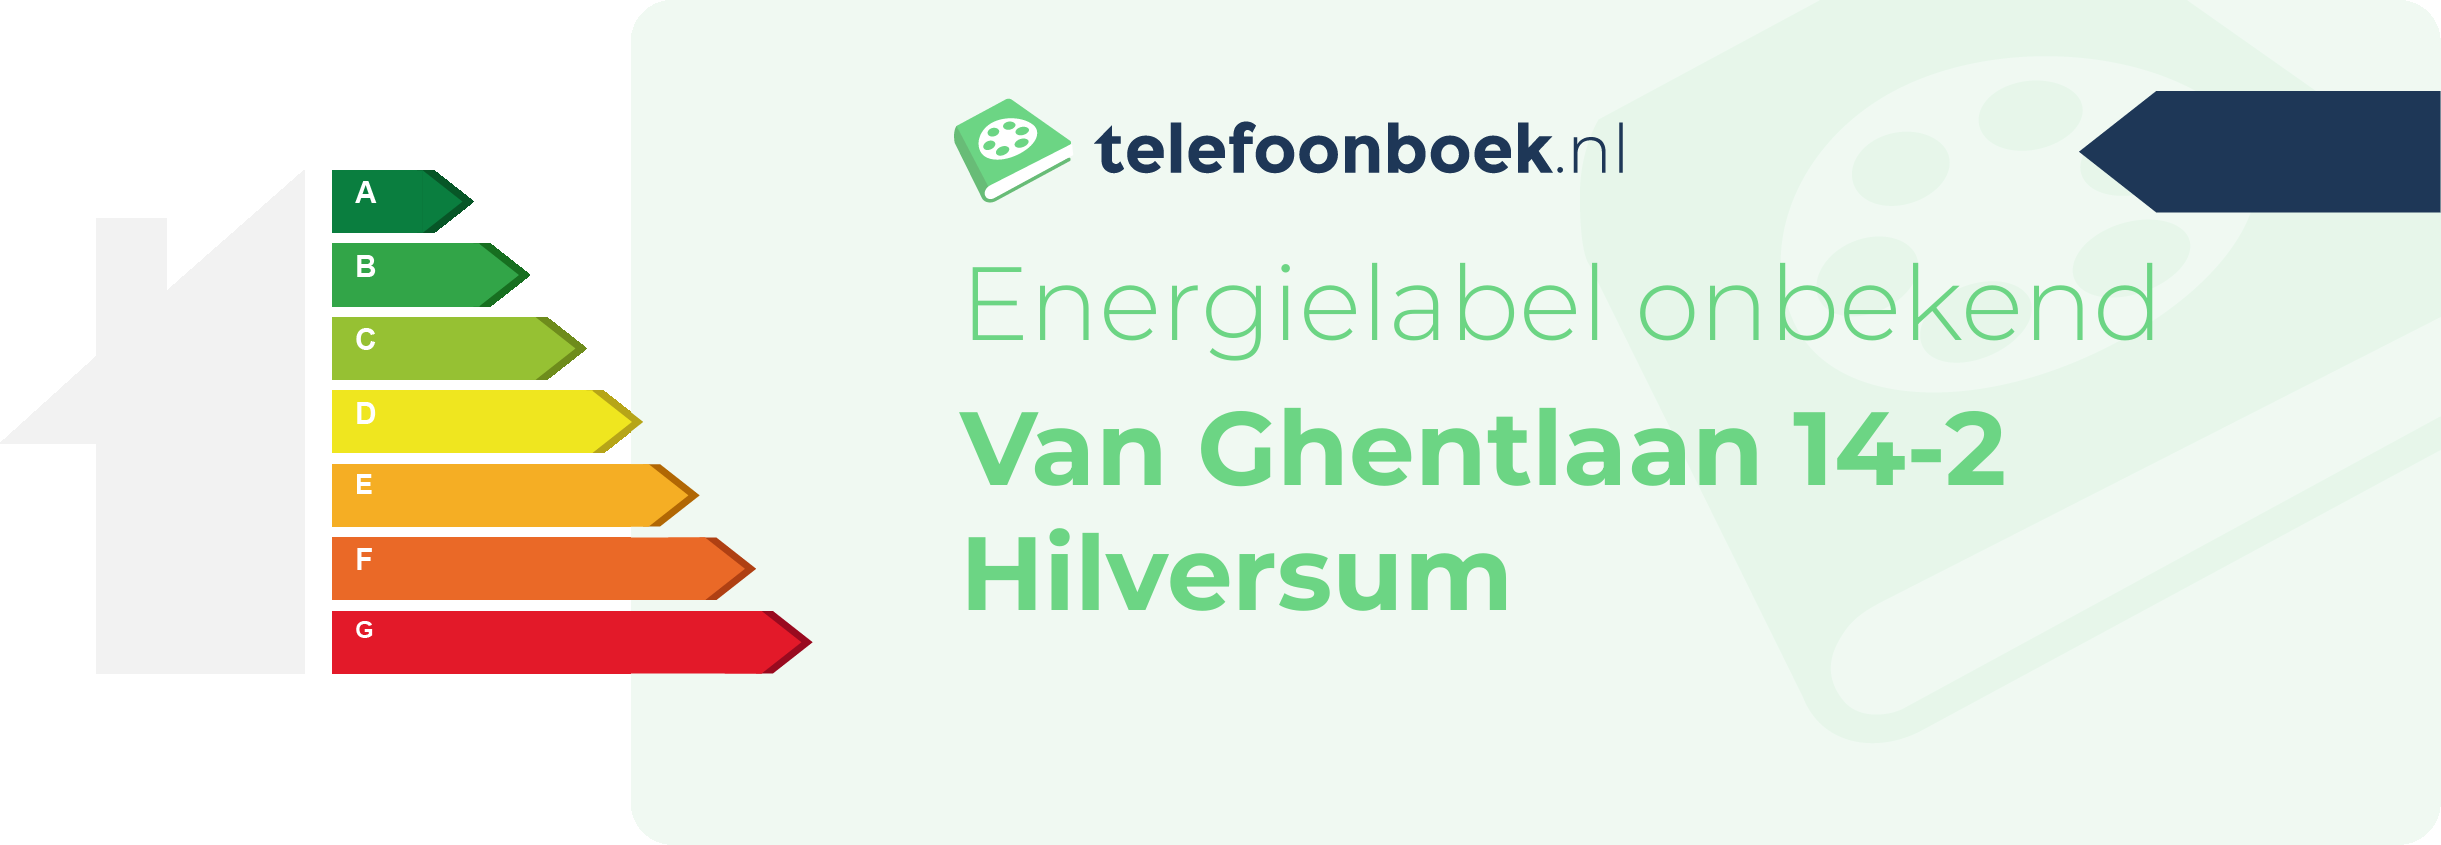 Energielabel Van Ghentlaan 14-2 Hilversum